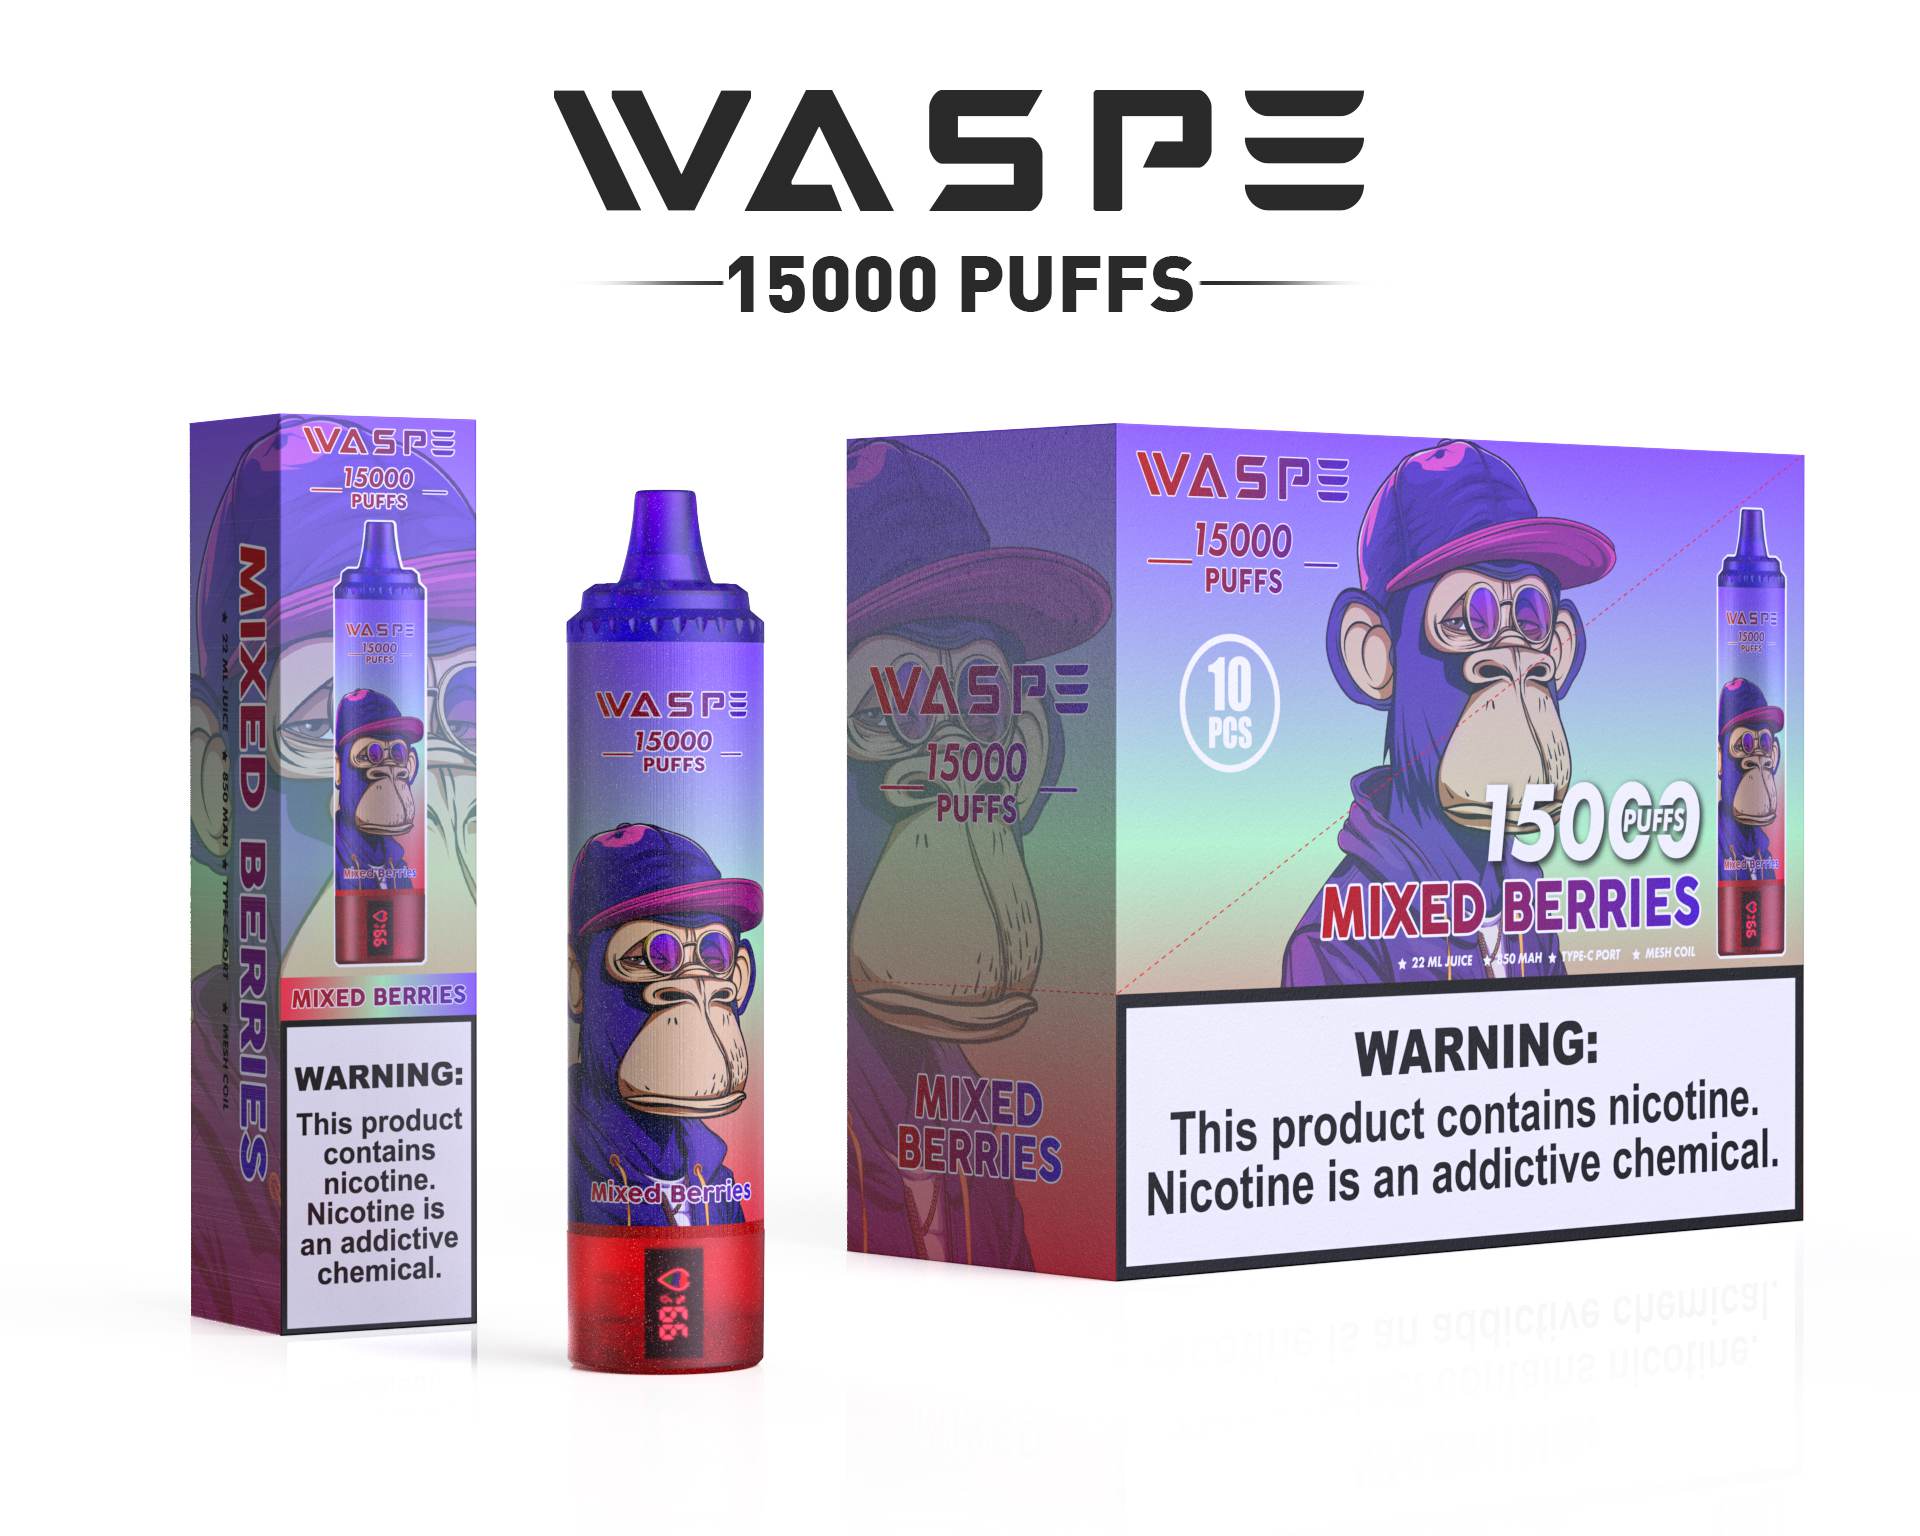 Waspe 15000 puff